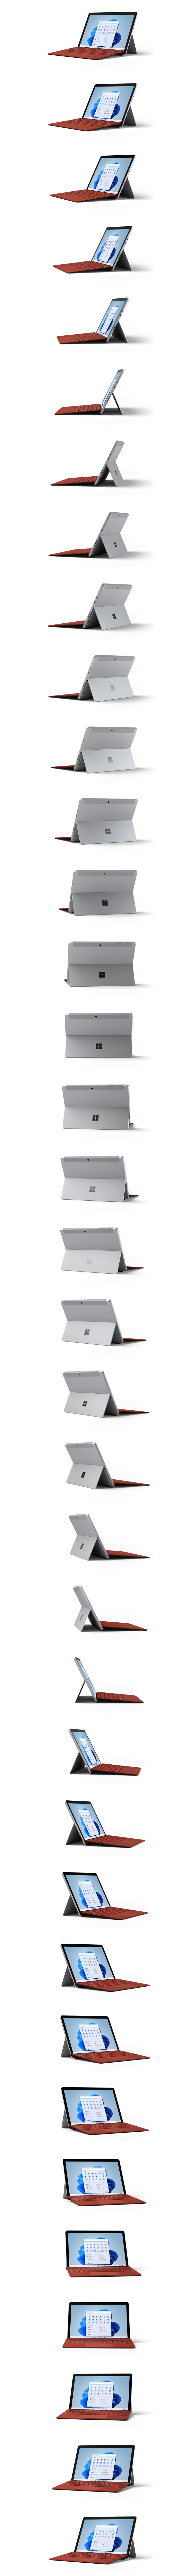 Surface Go 3 a rodar a 360 graus.